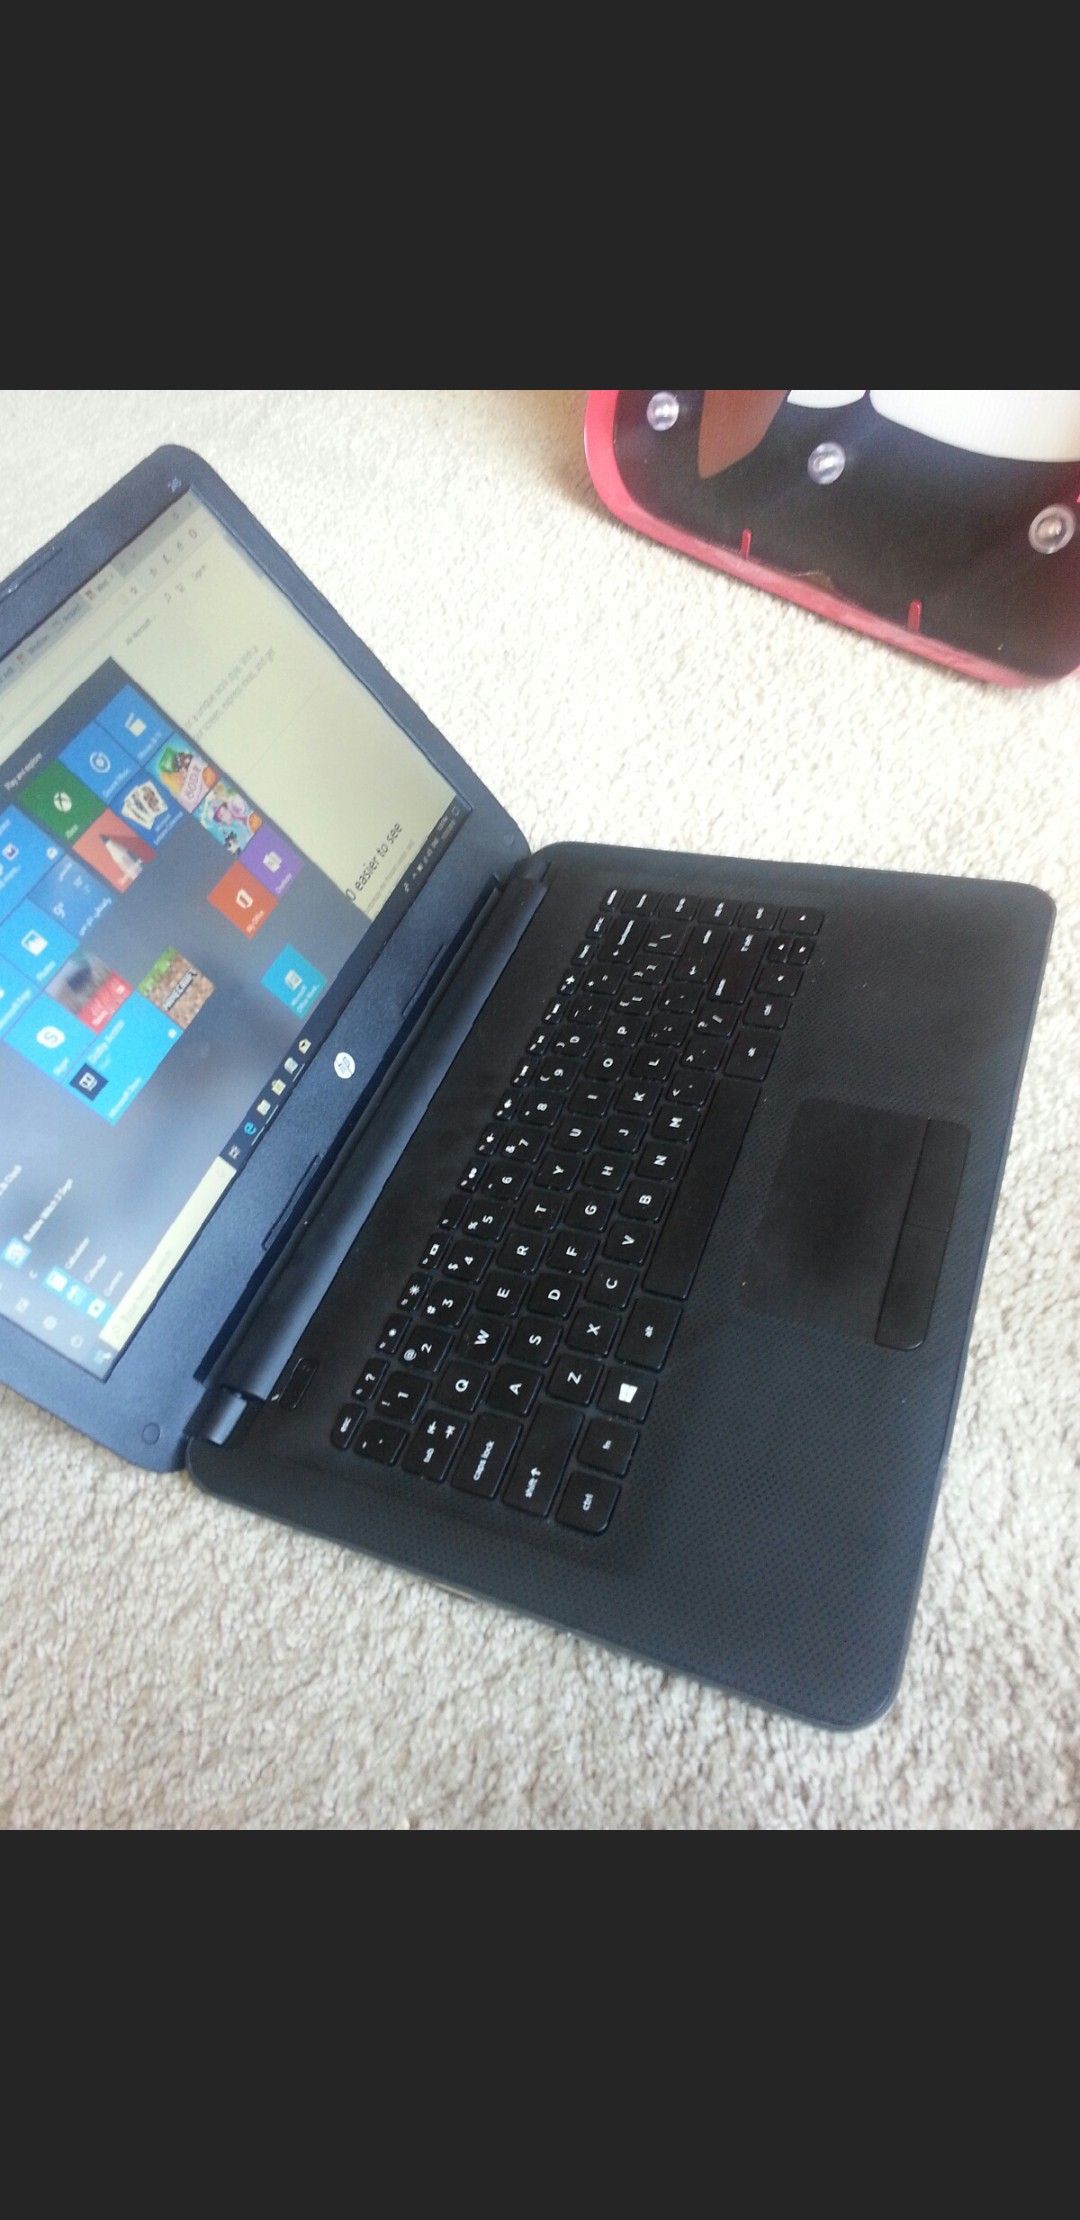 Laptop HP MT245, 1.8ghz, 4gb ram, 64gb ssd, 14" screen